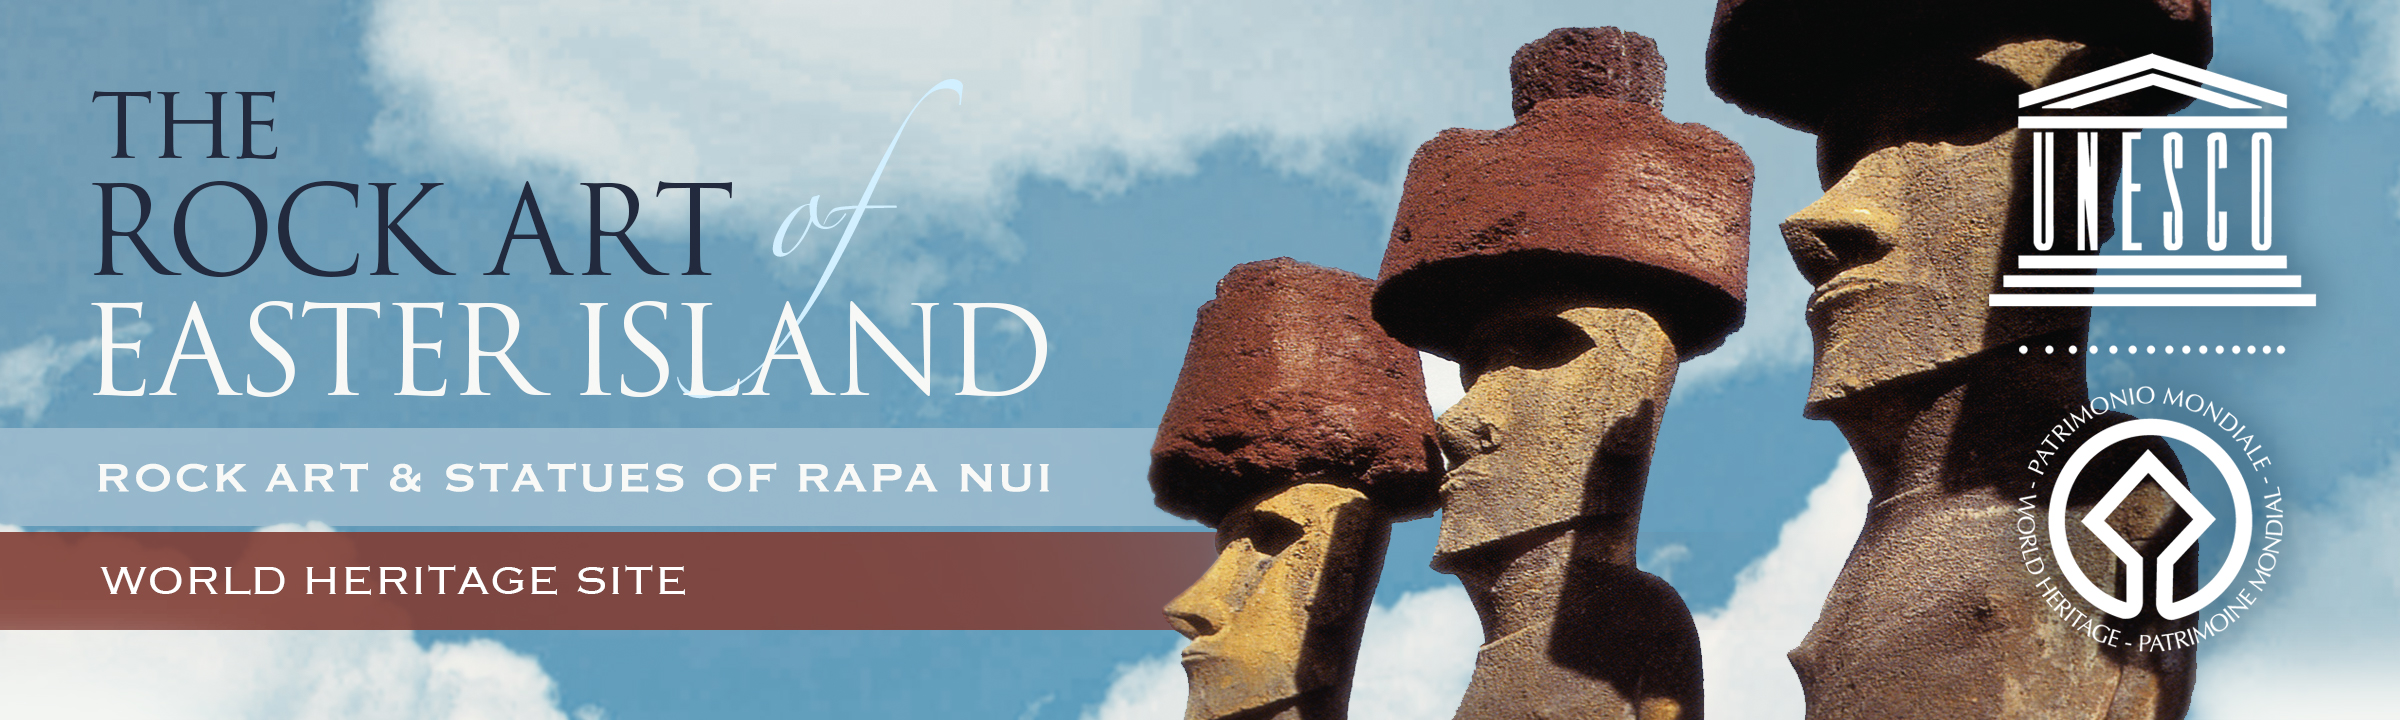 Easter Island Moai Statues and Rock Art of Rapa Nui